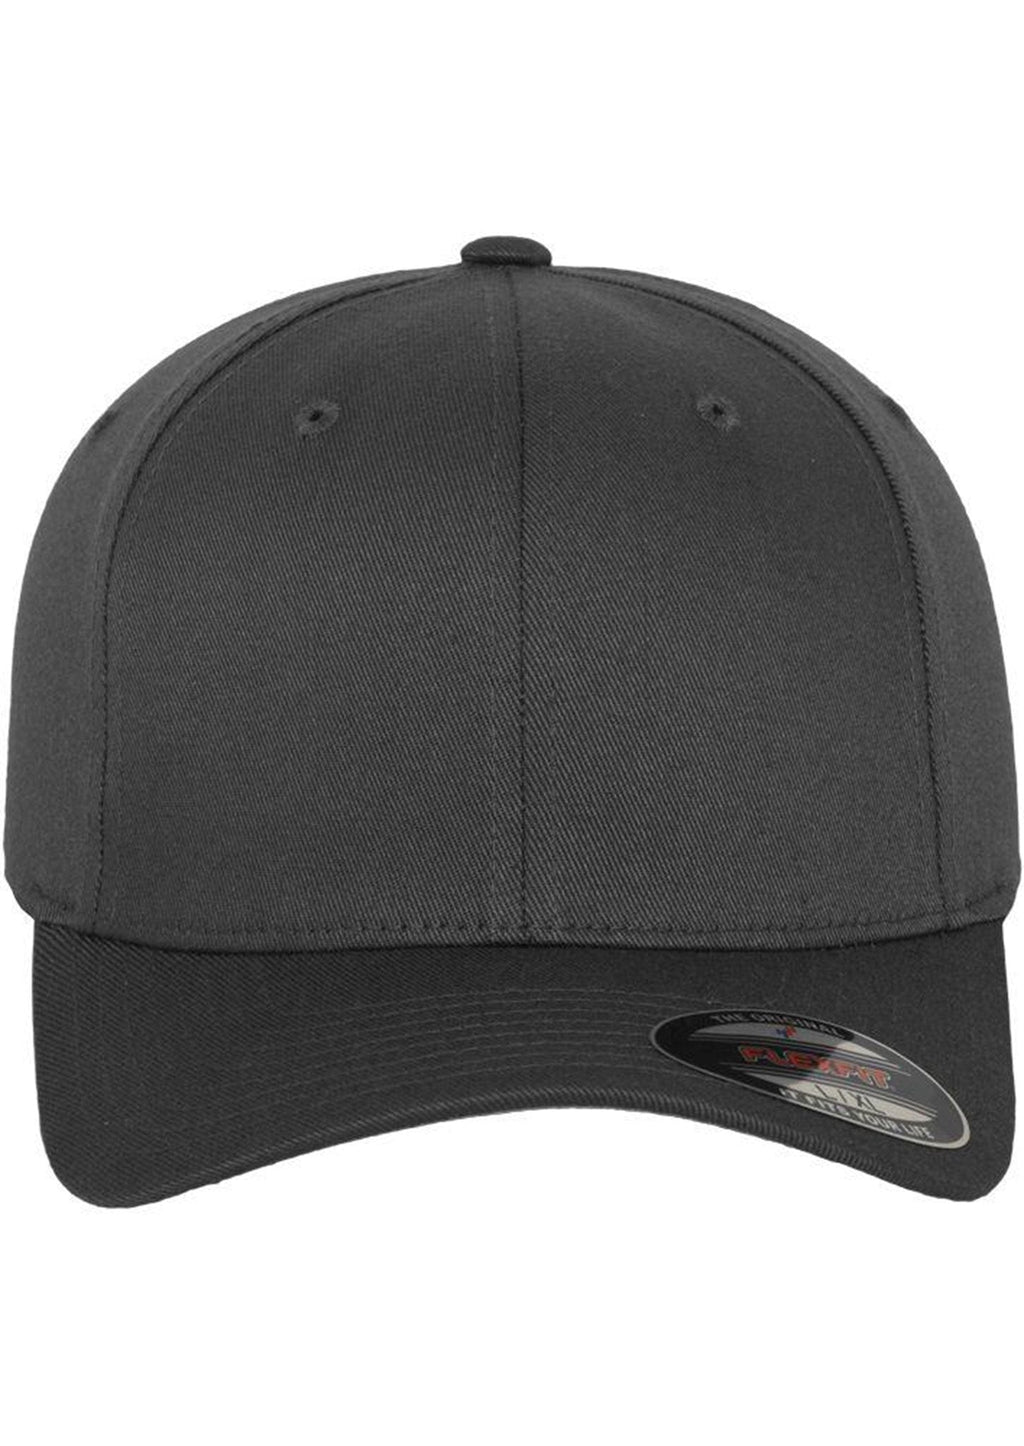 FlexFit原始棒球帽 - 深灰色